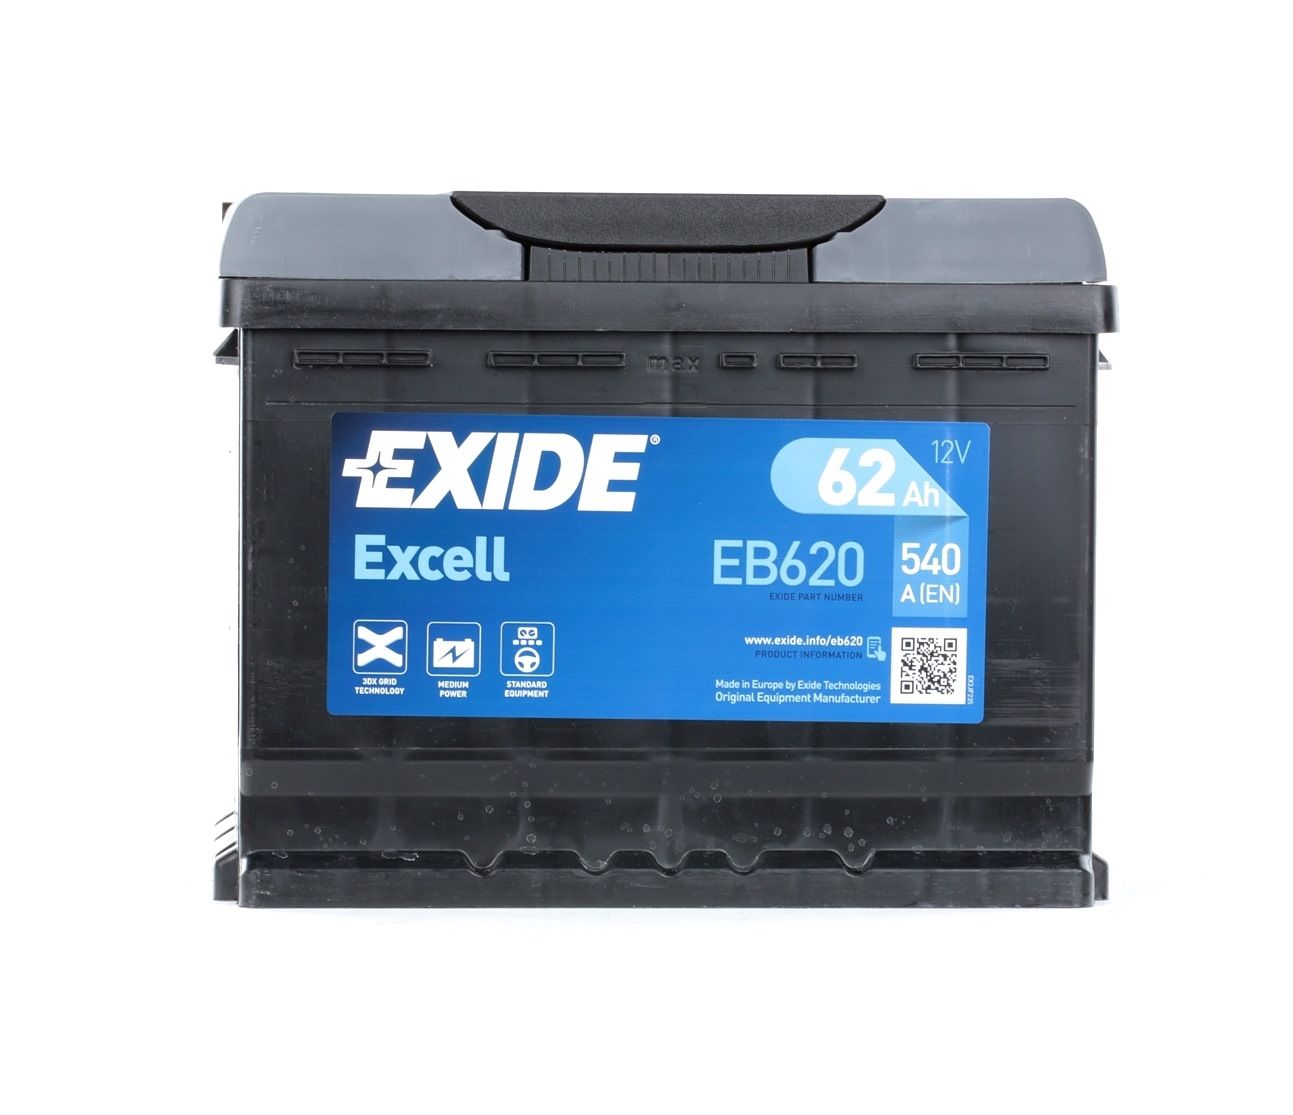 55559 EXIDE EXCELL 12V 62Ah 540A Bleiakkumulator Kälteprüfstrom EN: 540A, Spannung: 12V Starterbatterie EB620 günstig kaufen